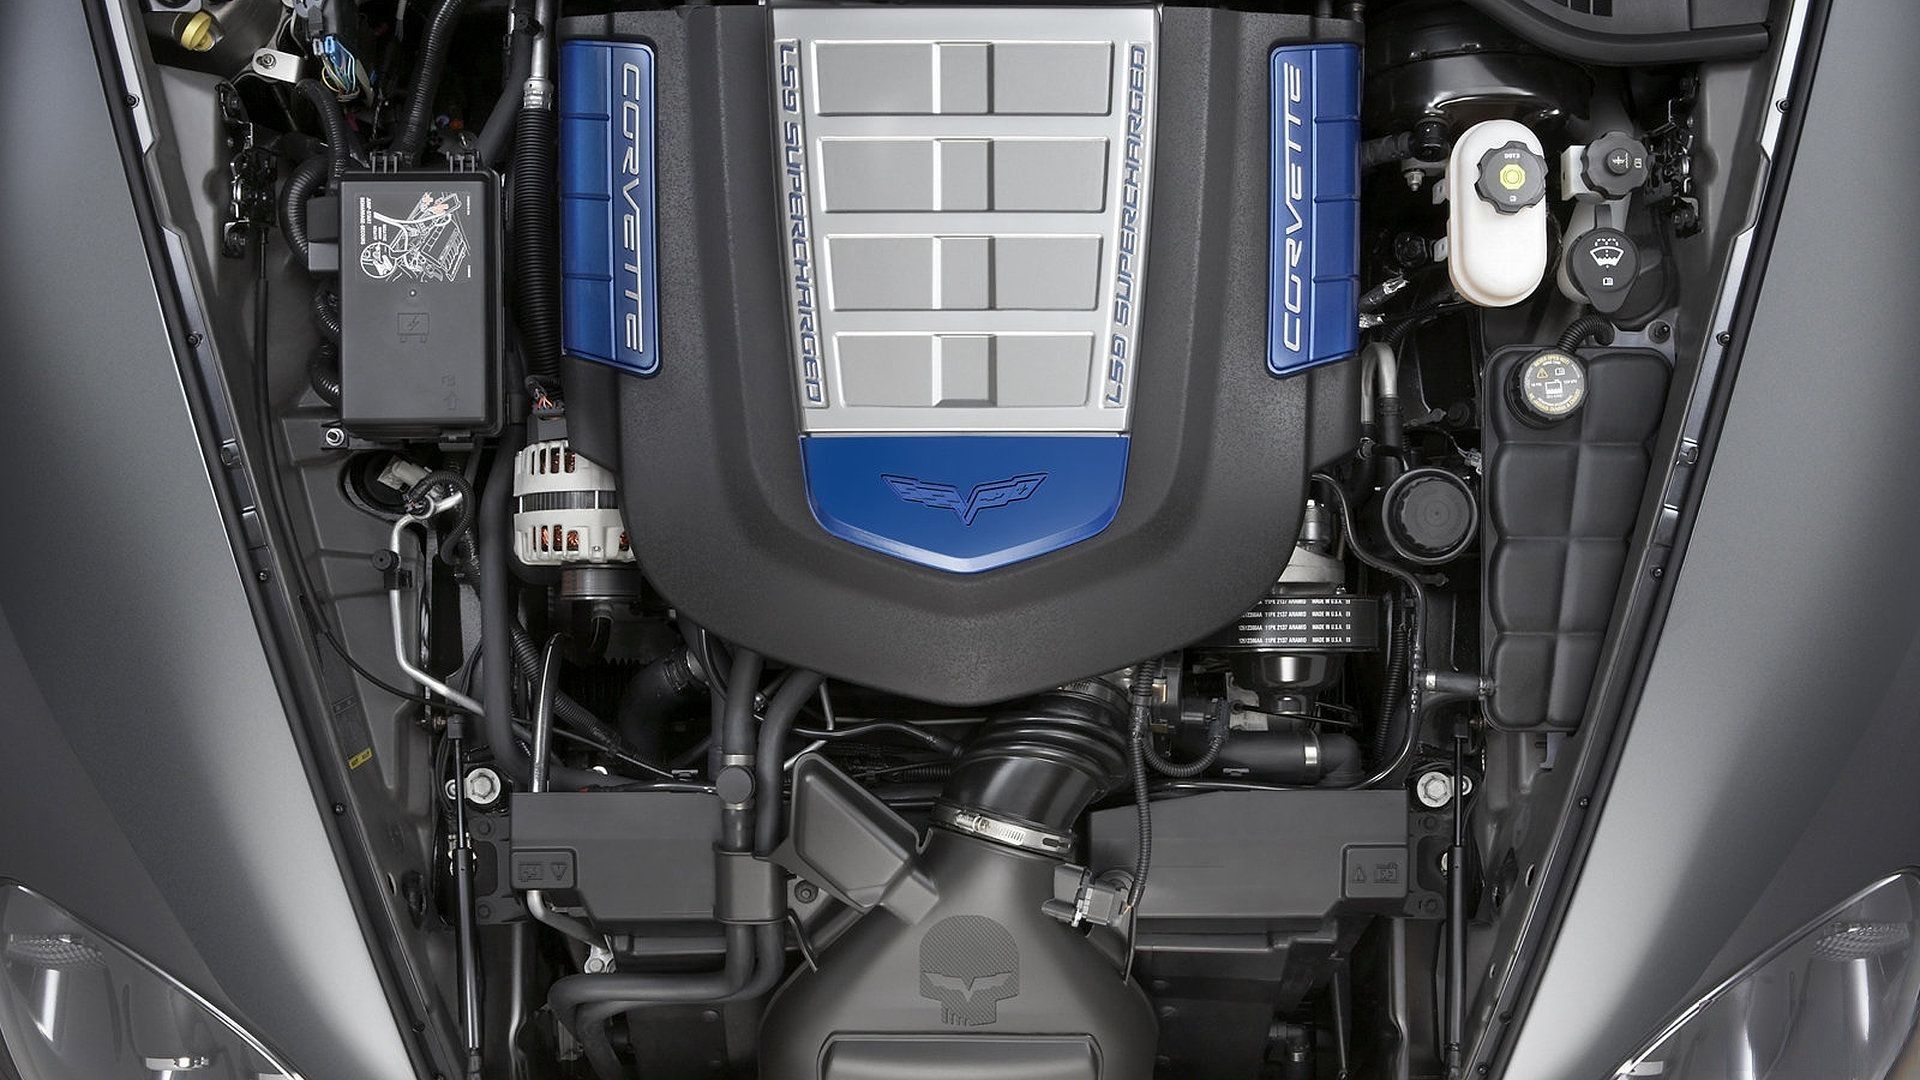 2009 Chevrolet Corvette C6 ZR-1 LS9 engine